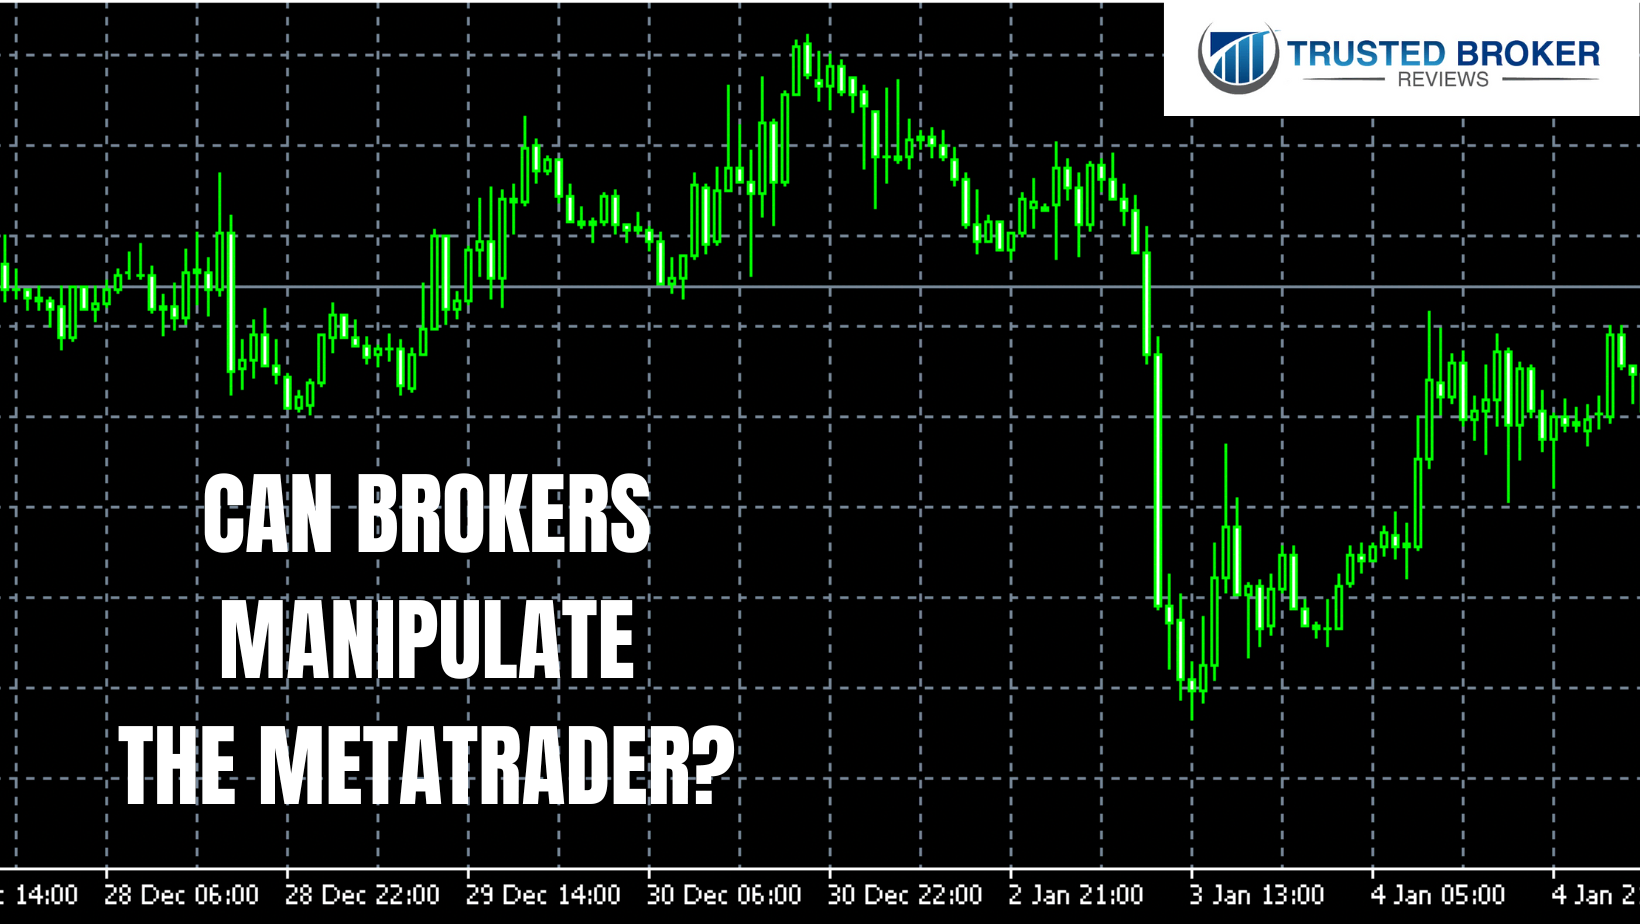 Can brokers manipulate the MetaTrader?